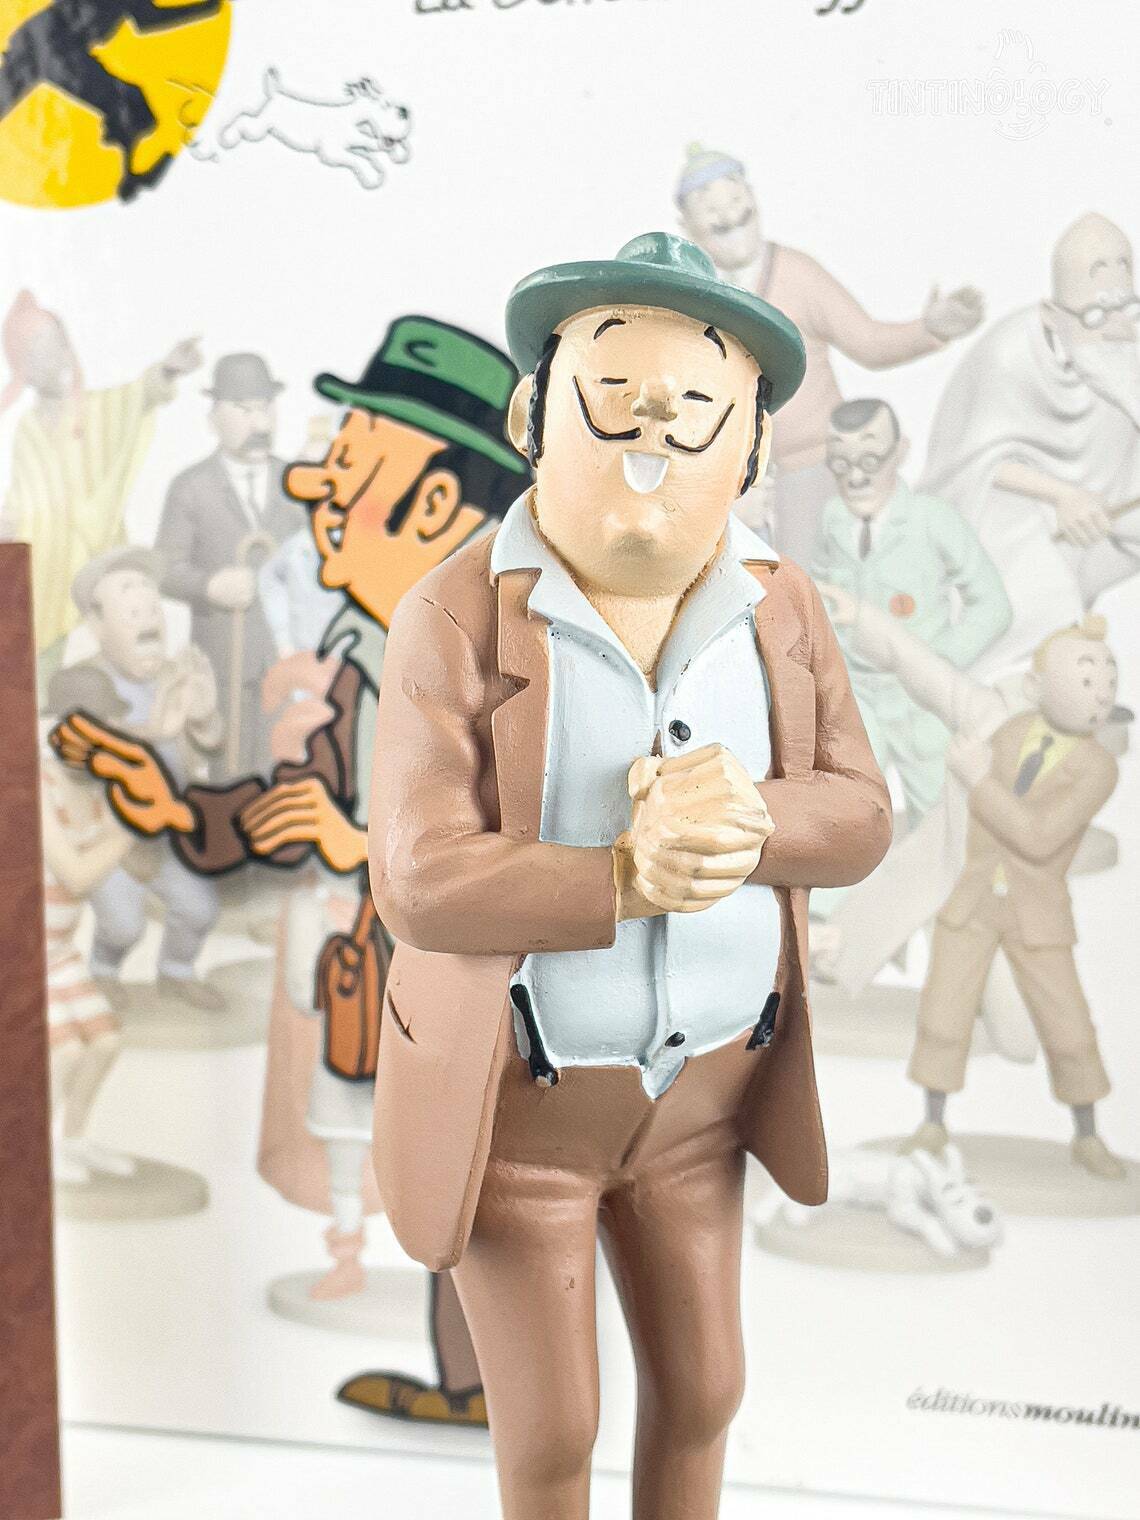 Tintin Figurines Officielle # 16 Oliveira Da Figuera model ML resin Figure